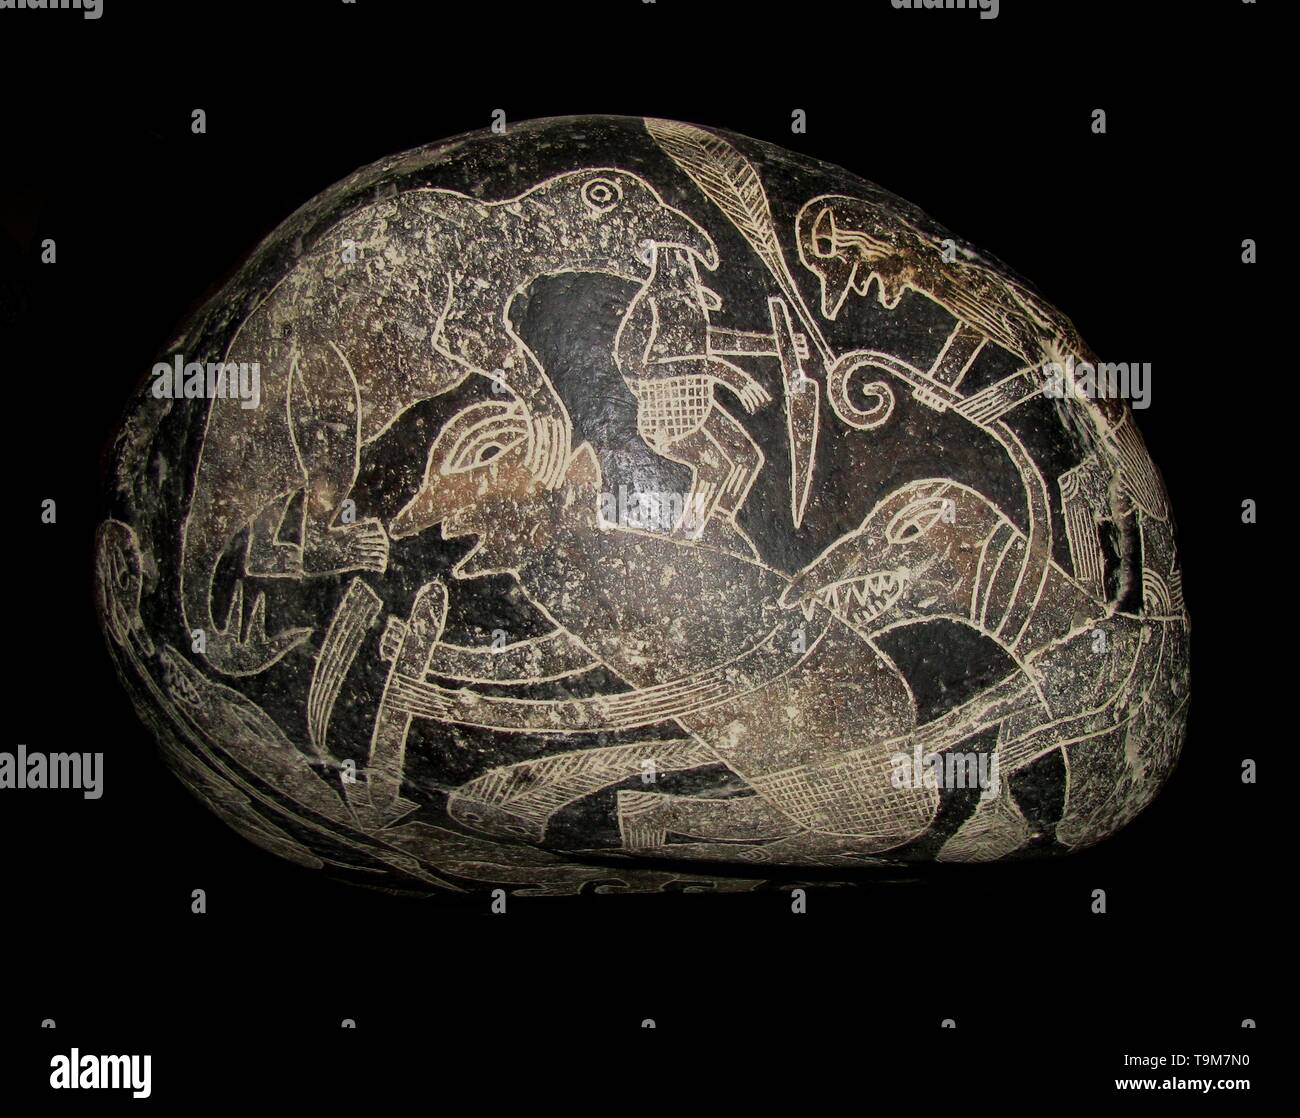 The ica stone. A dinosaur killing a man. Museum: Museo de piedras grabadas de Ica. Author: The Ica stones. Stock Photo